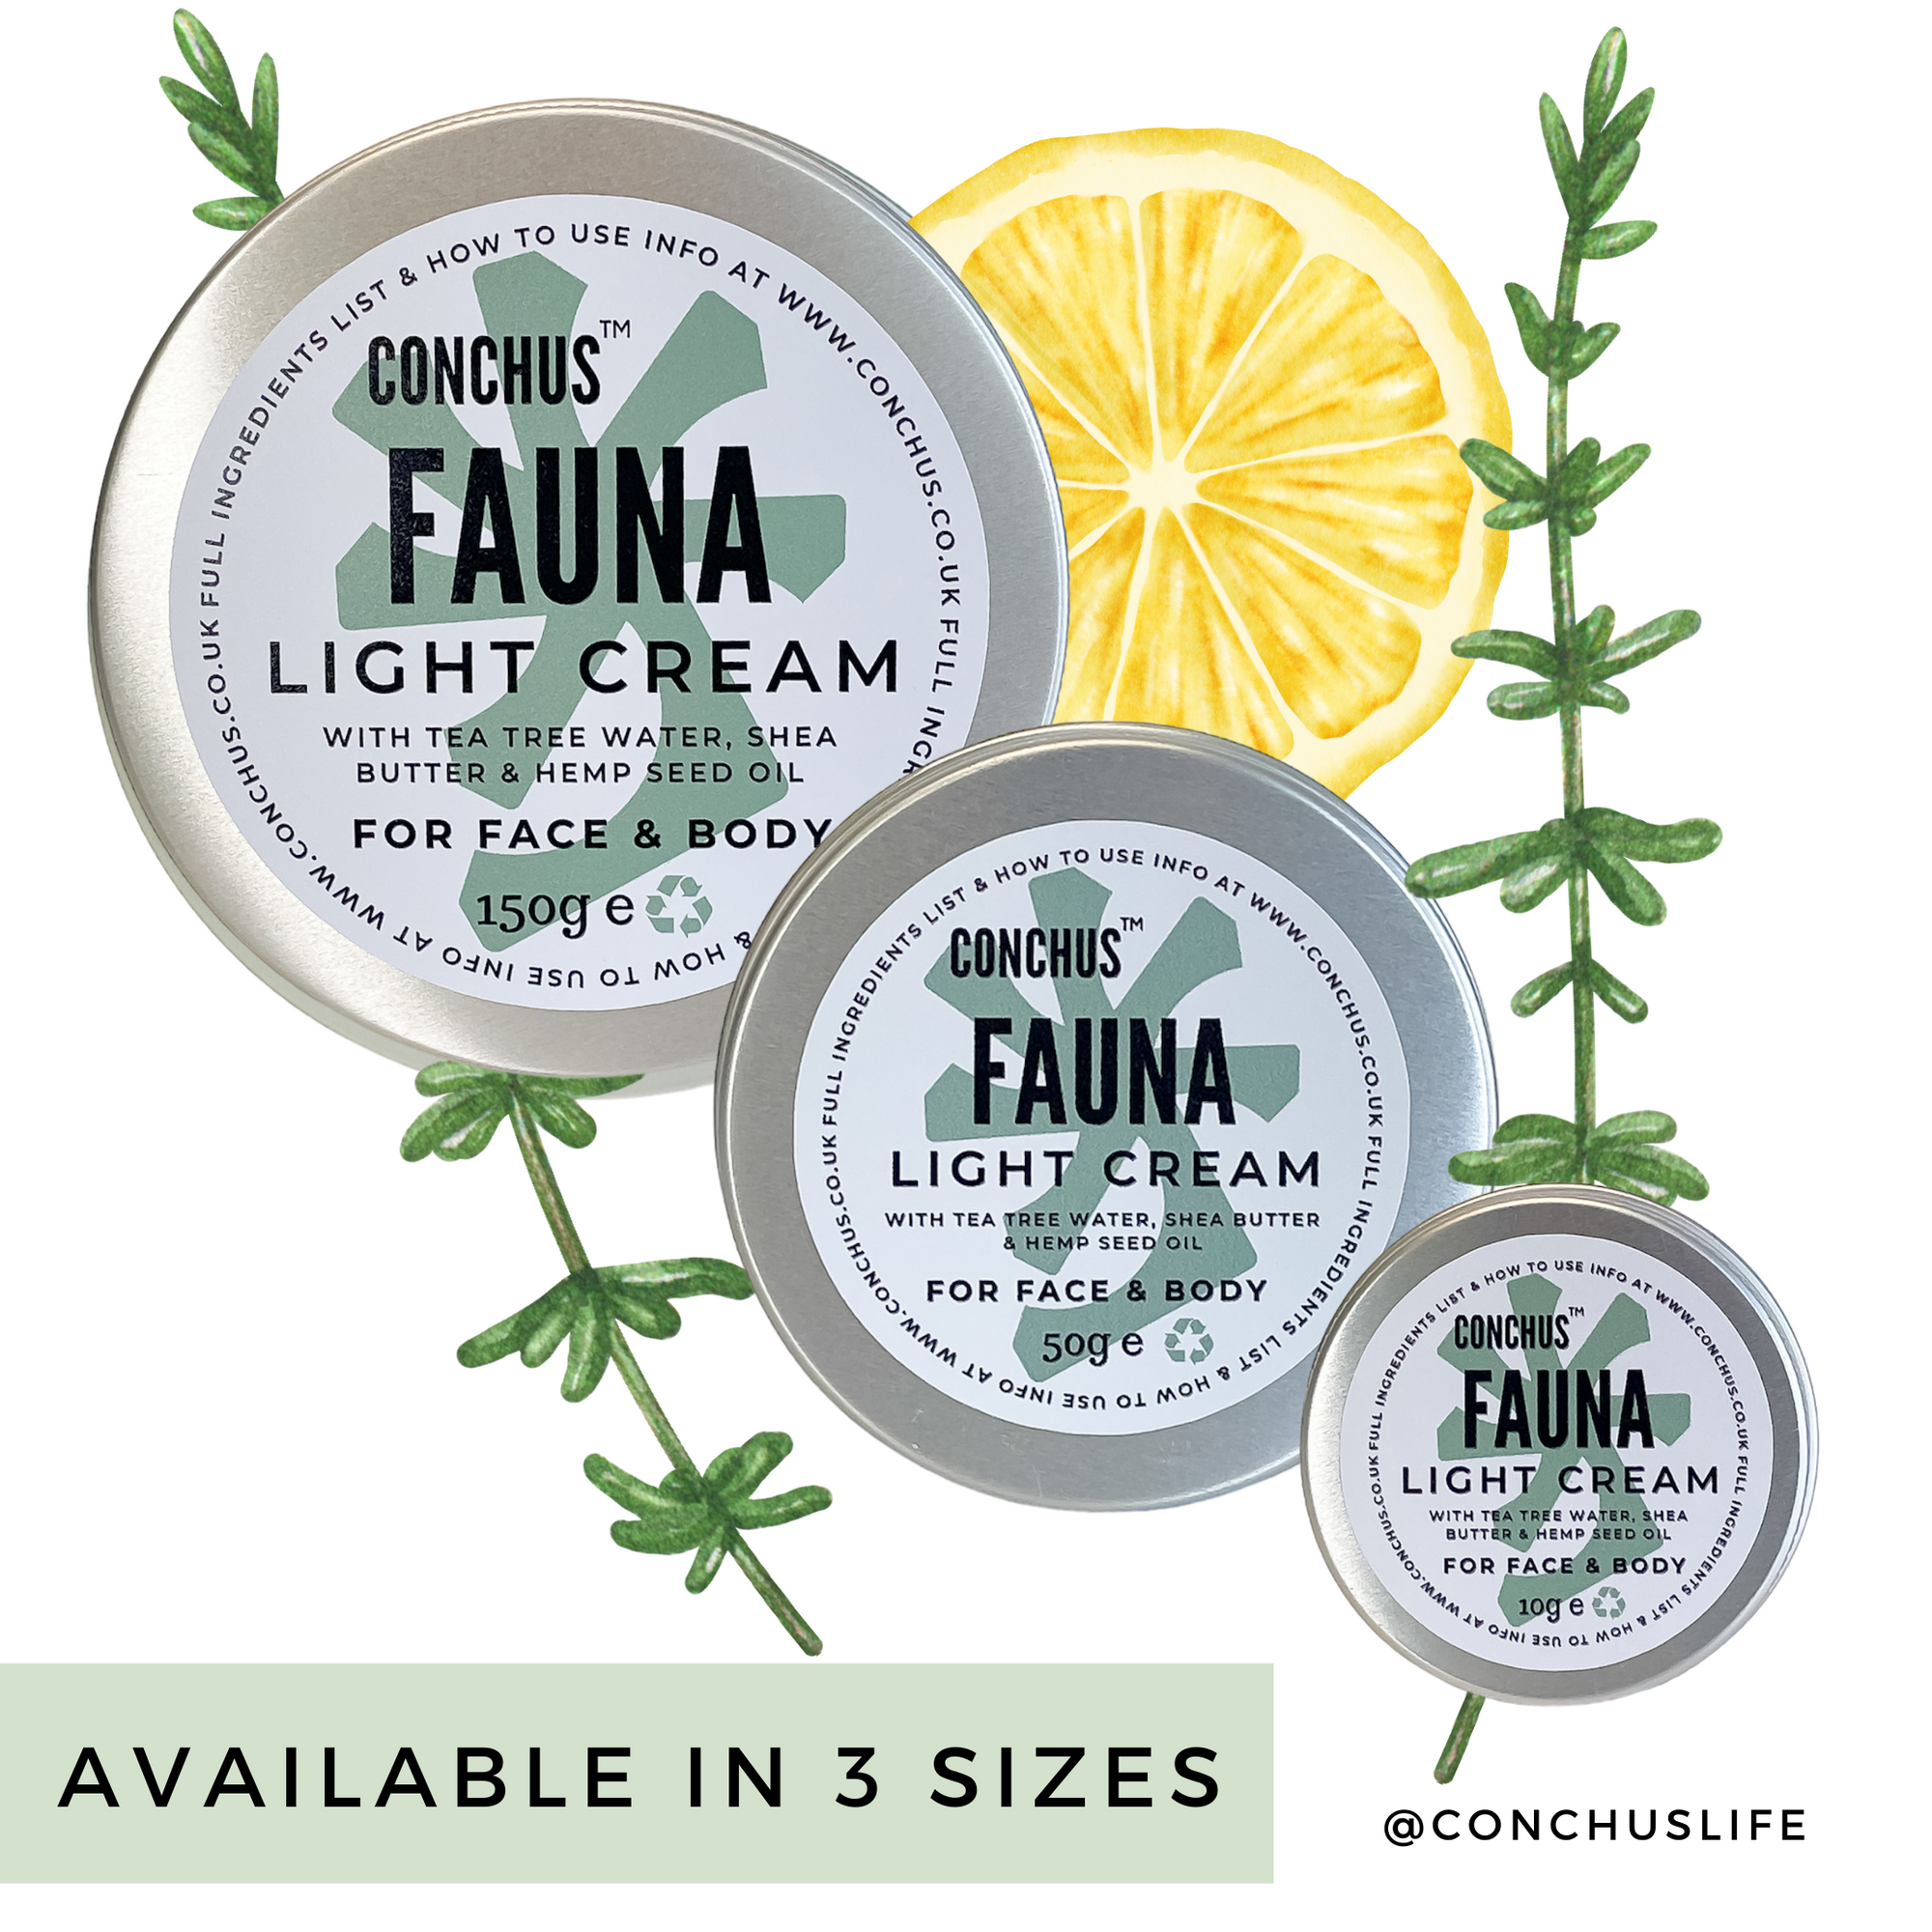 Fauna Light Cream